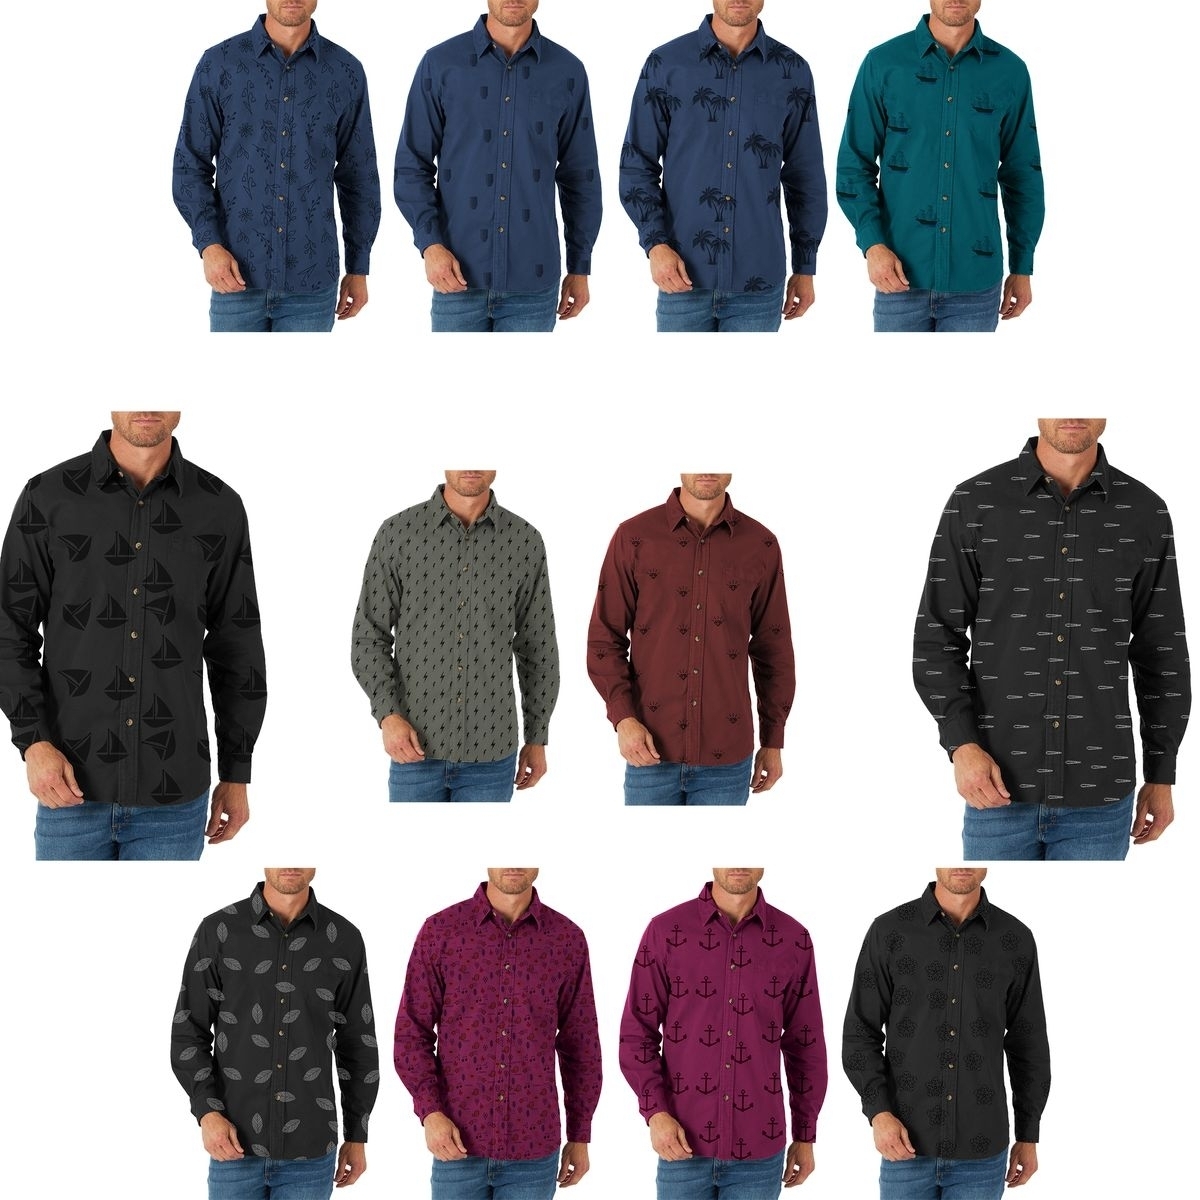 Multi-Pack: Men's Formal Classic Slim Fit Button Down Long Sleeve Printed Dress Shirt - 3-pack, Medium